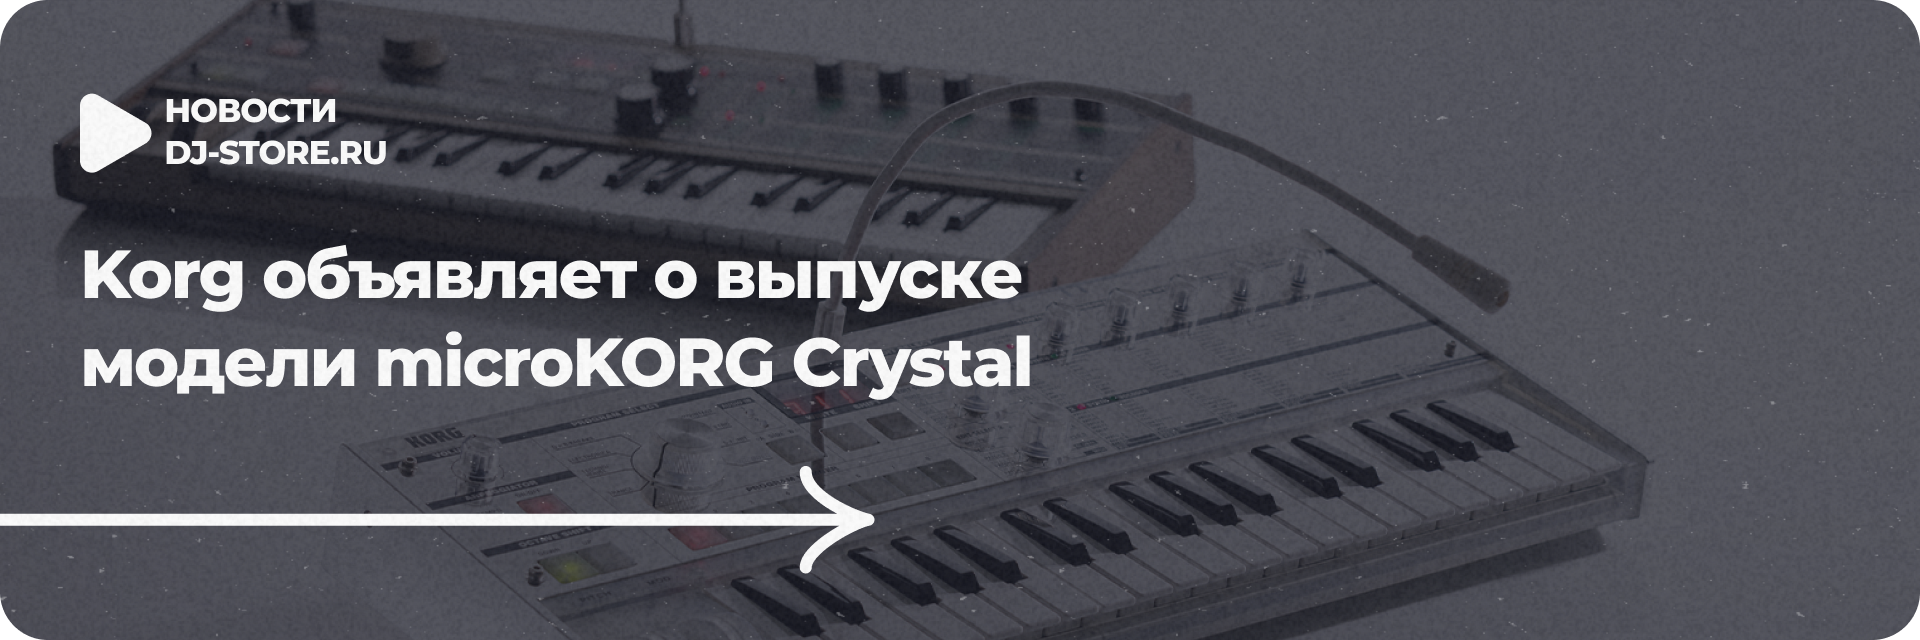 Korg объявляет о выпуске модели microKORG Crystal